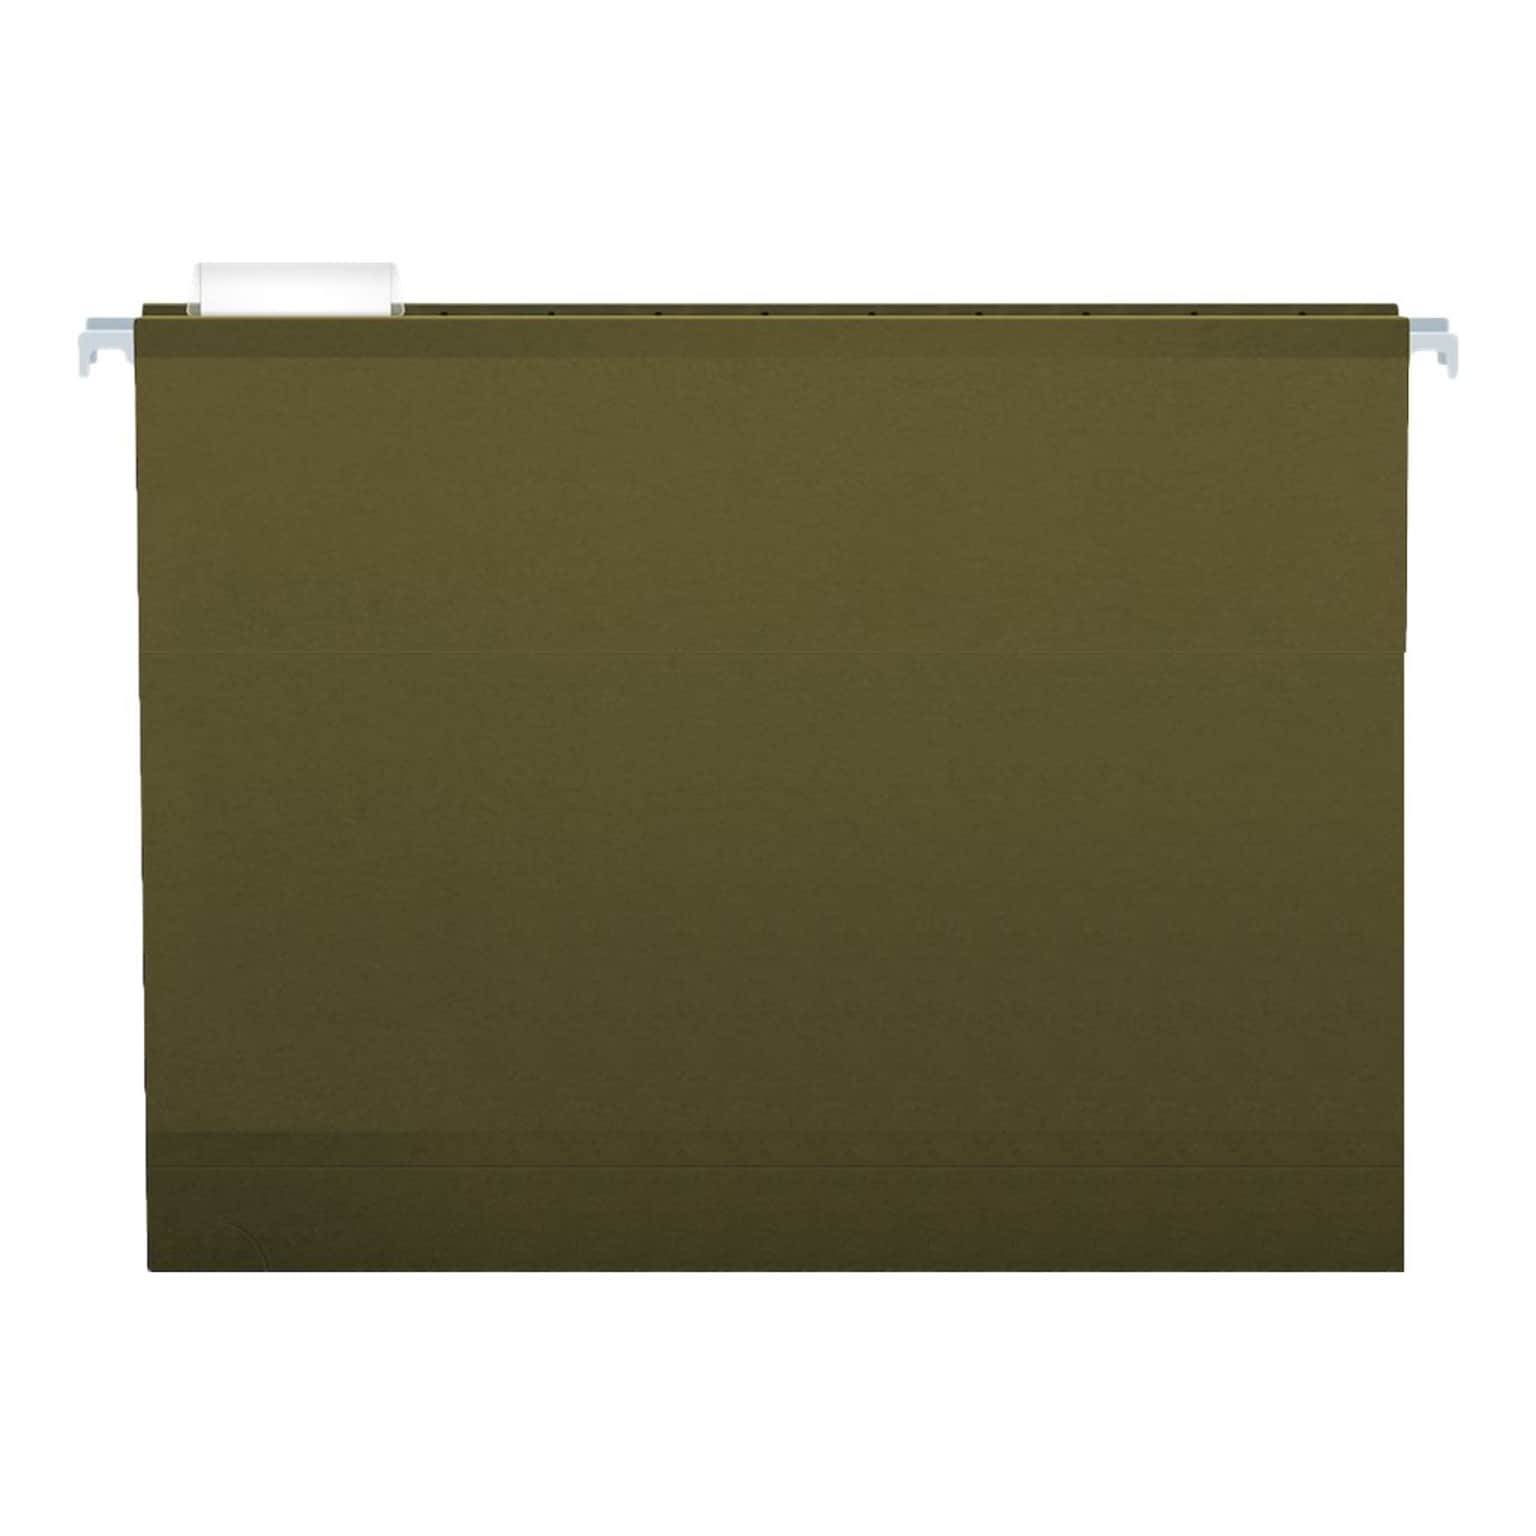 Pendaflex Reinforced Hanging File Folders, 5-Tab, 4 Expansion, Letter Size, Standard Green, 25/Box (PFX 04152x4)